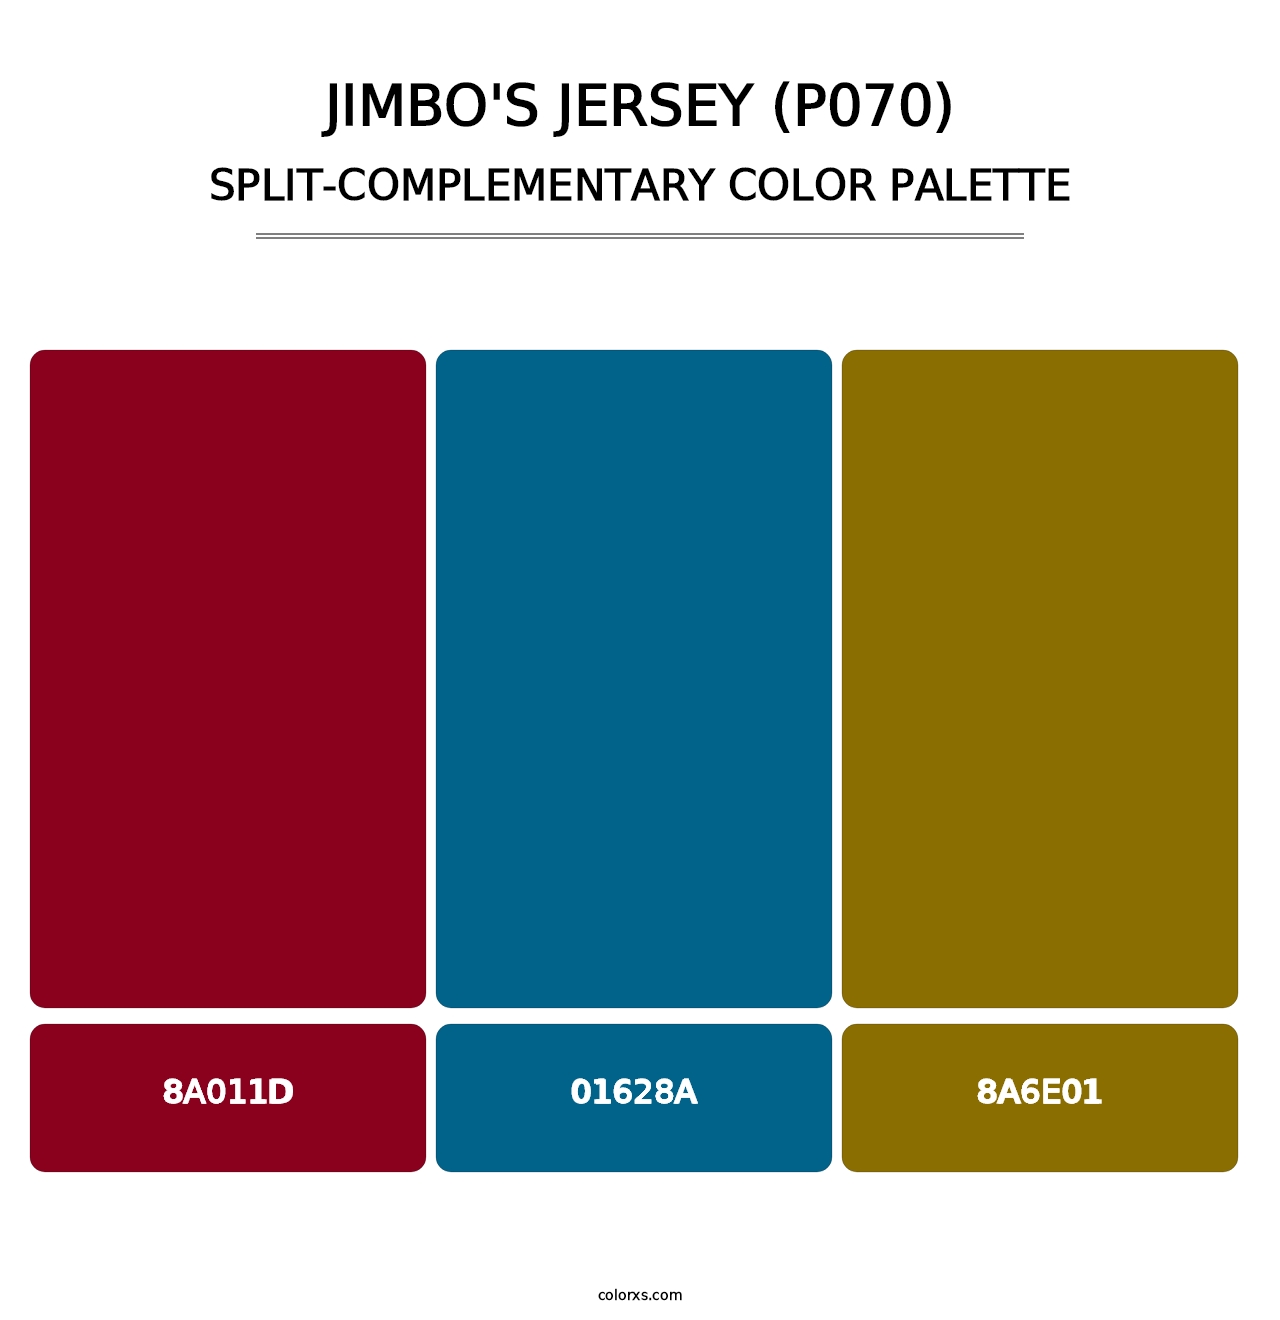 Jimbo's Jersey (P070) - Split-Complementary Color Palette